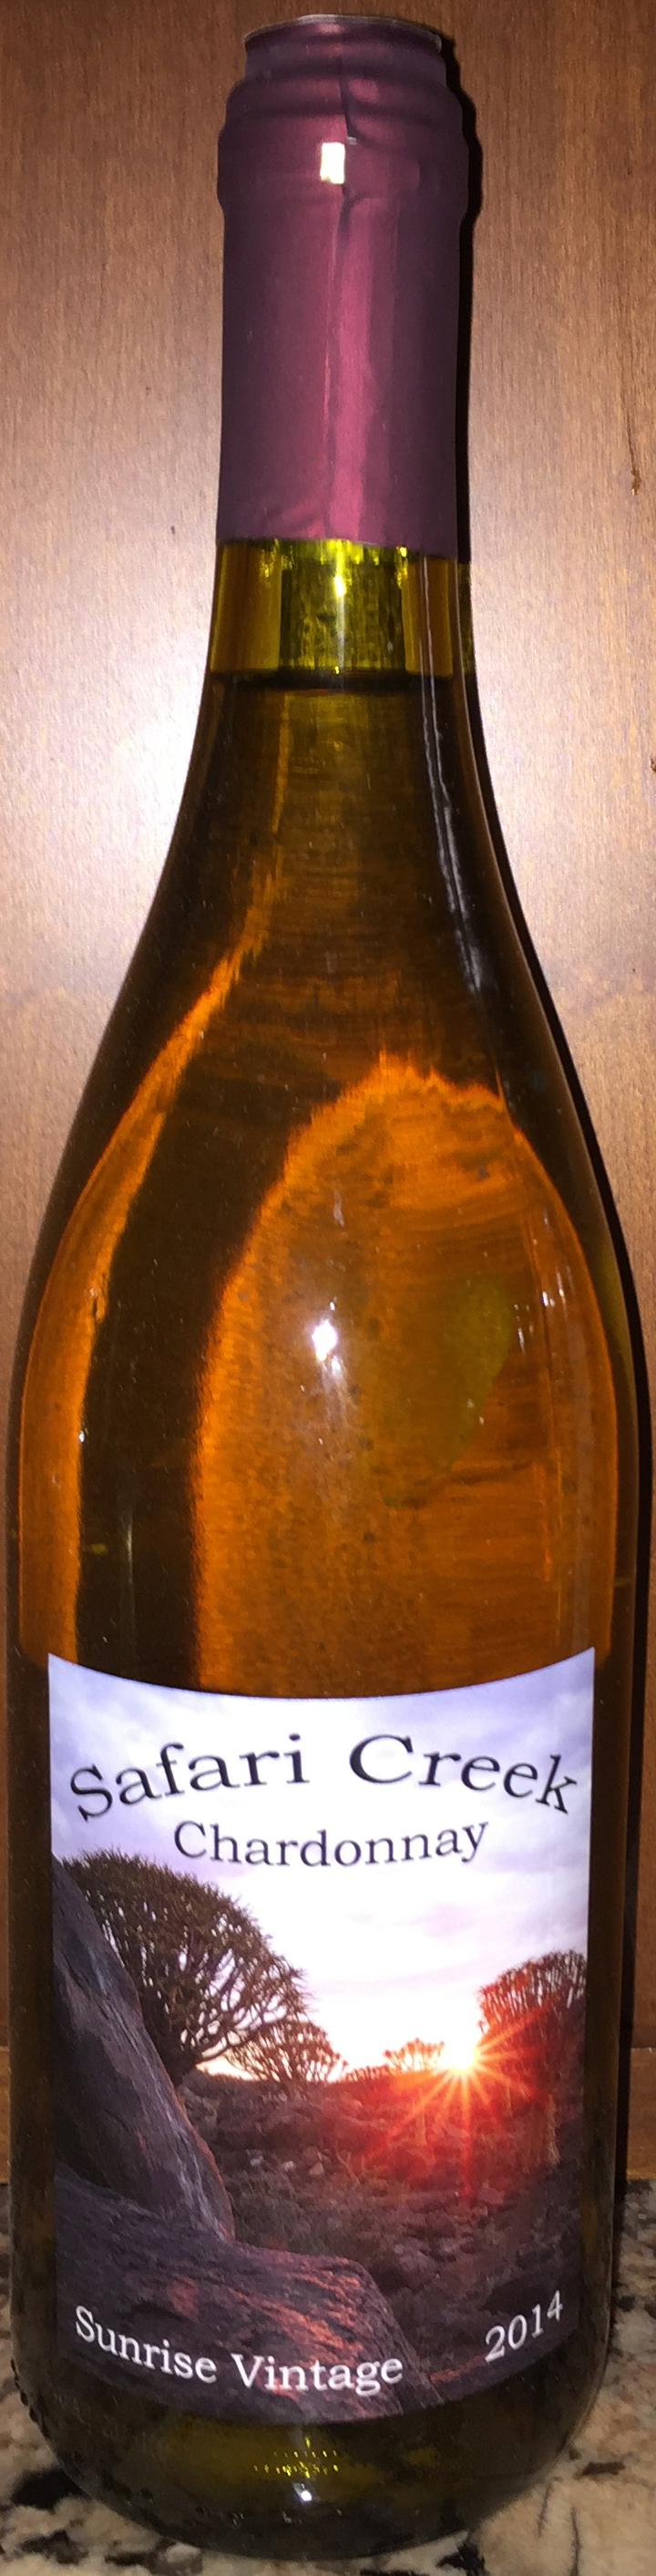 2014 Bottle